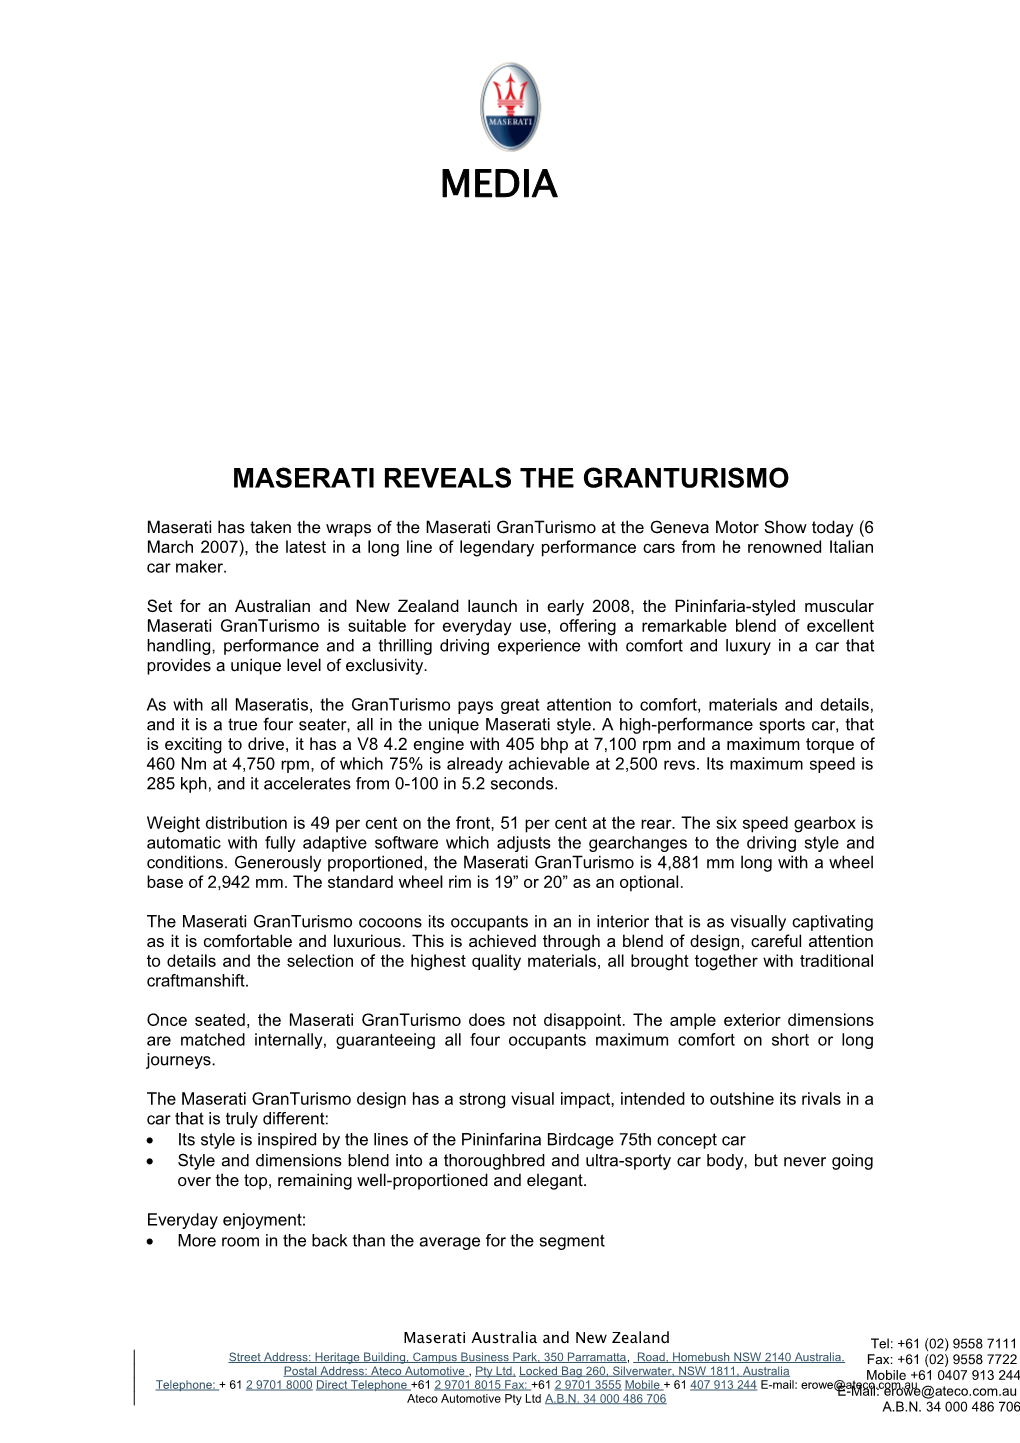 Maserati Reveals the Granturismo